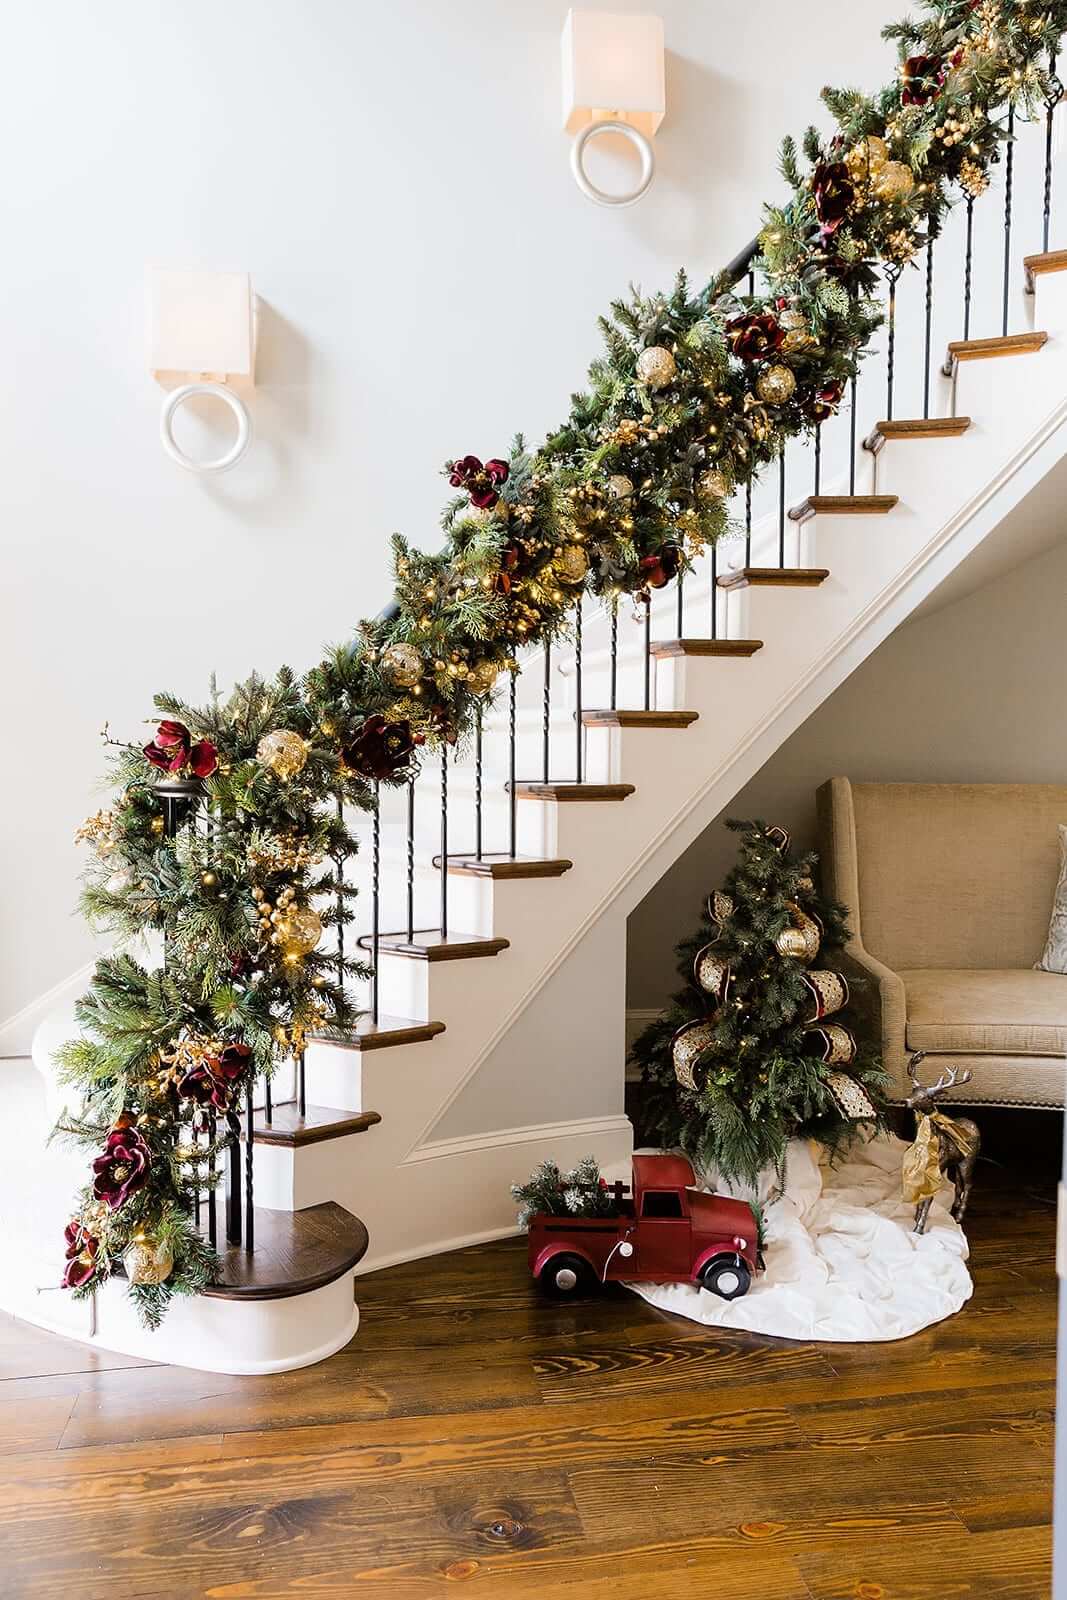 Christmas Garland Decoration Ideas For Home